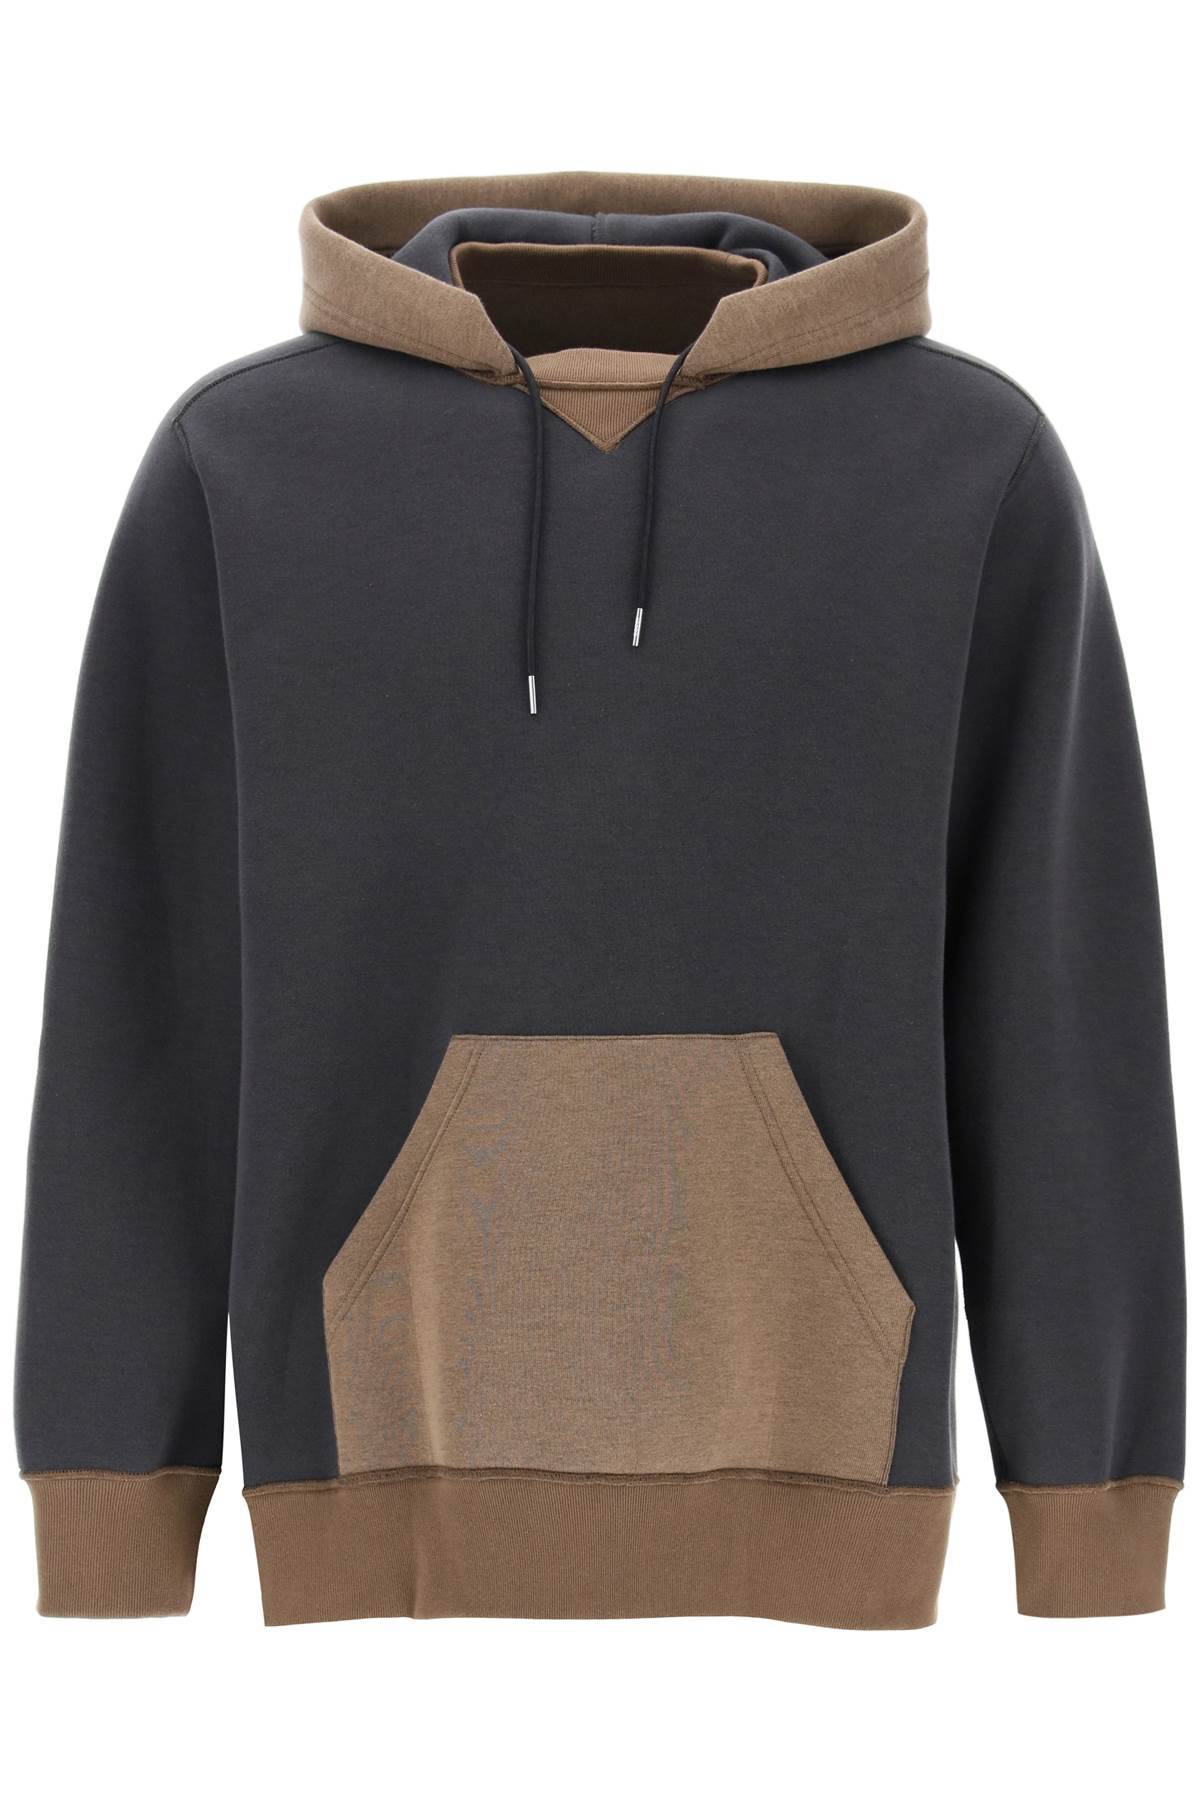 Sacai SACAI hooded sweatshirt with reverse